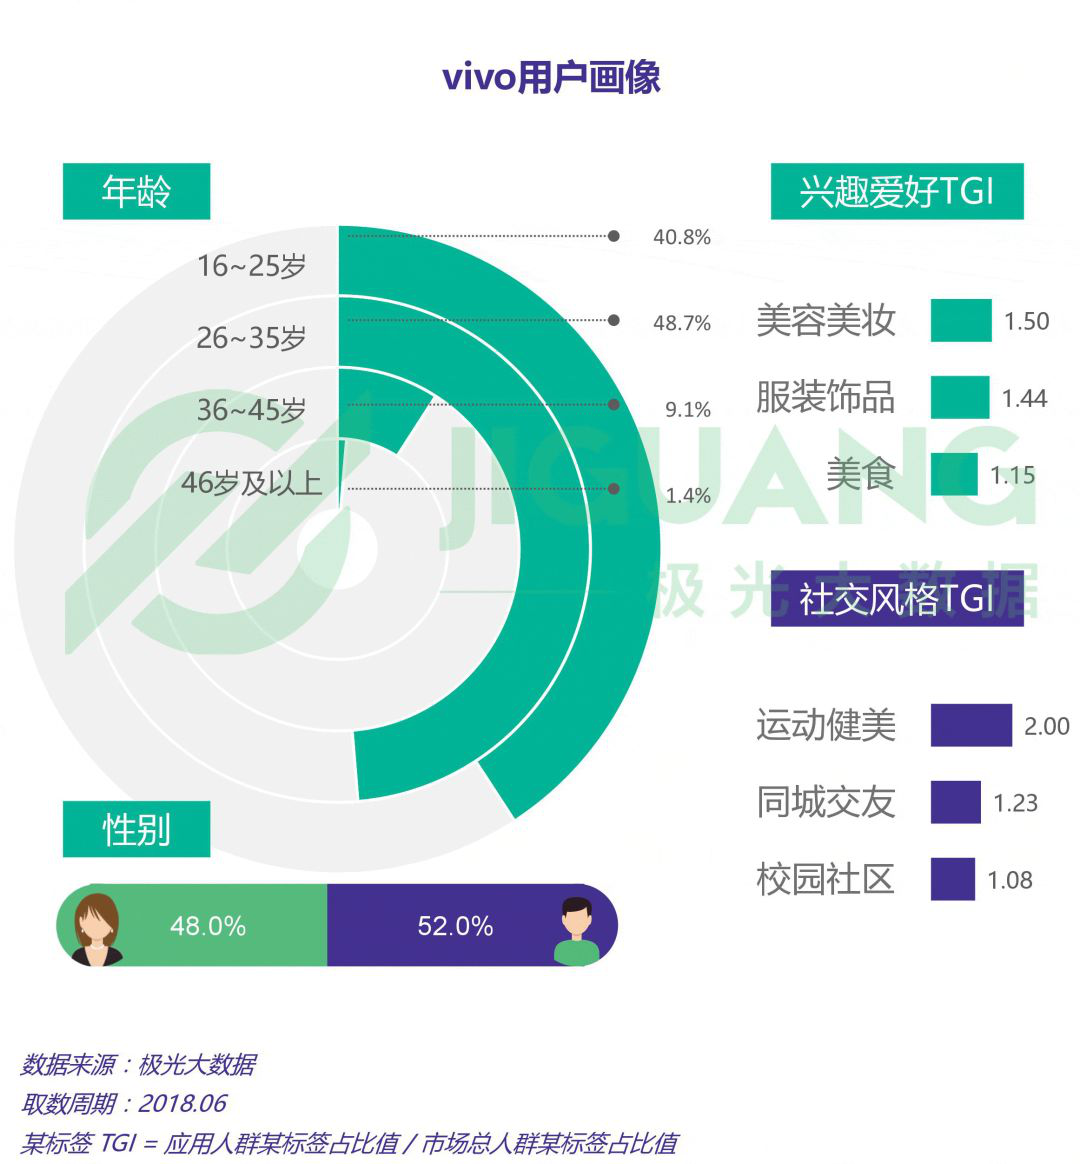 Q2中国手机市场分析:OPPO保有率力压iPhone,2000-2999价位最受欢迎